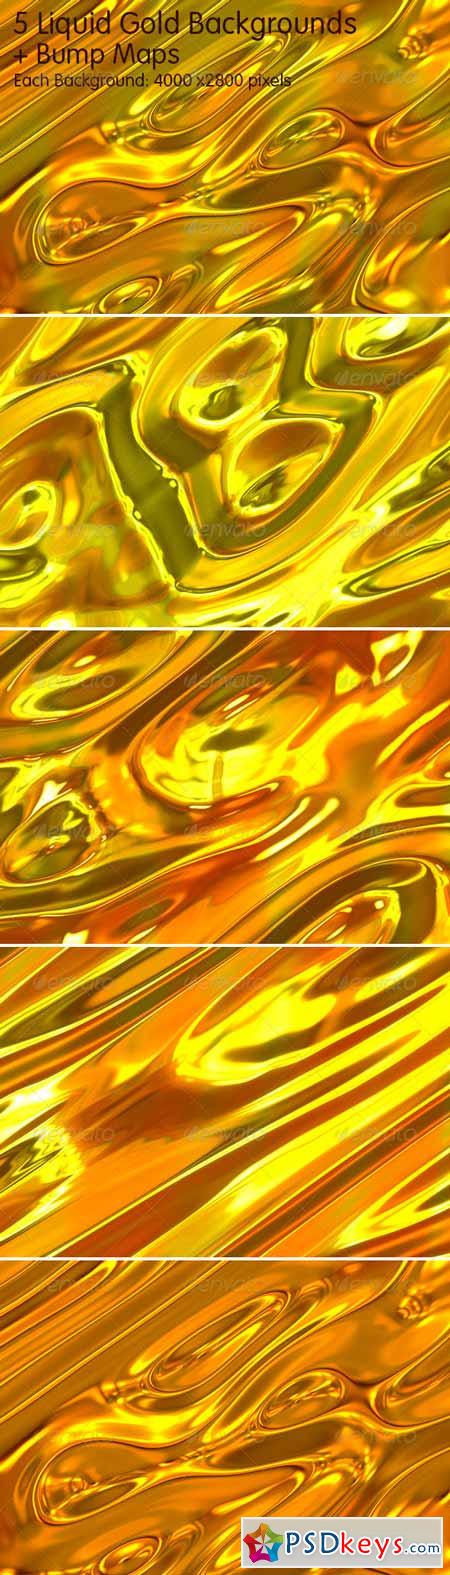 5 Liquid Gold Backgrounds 134952